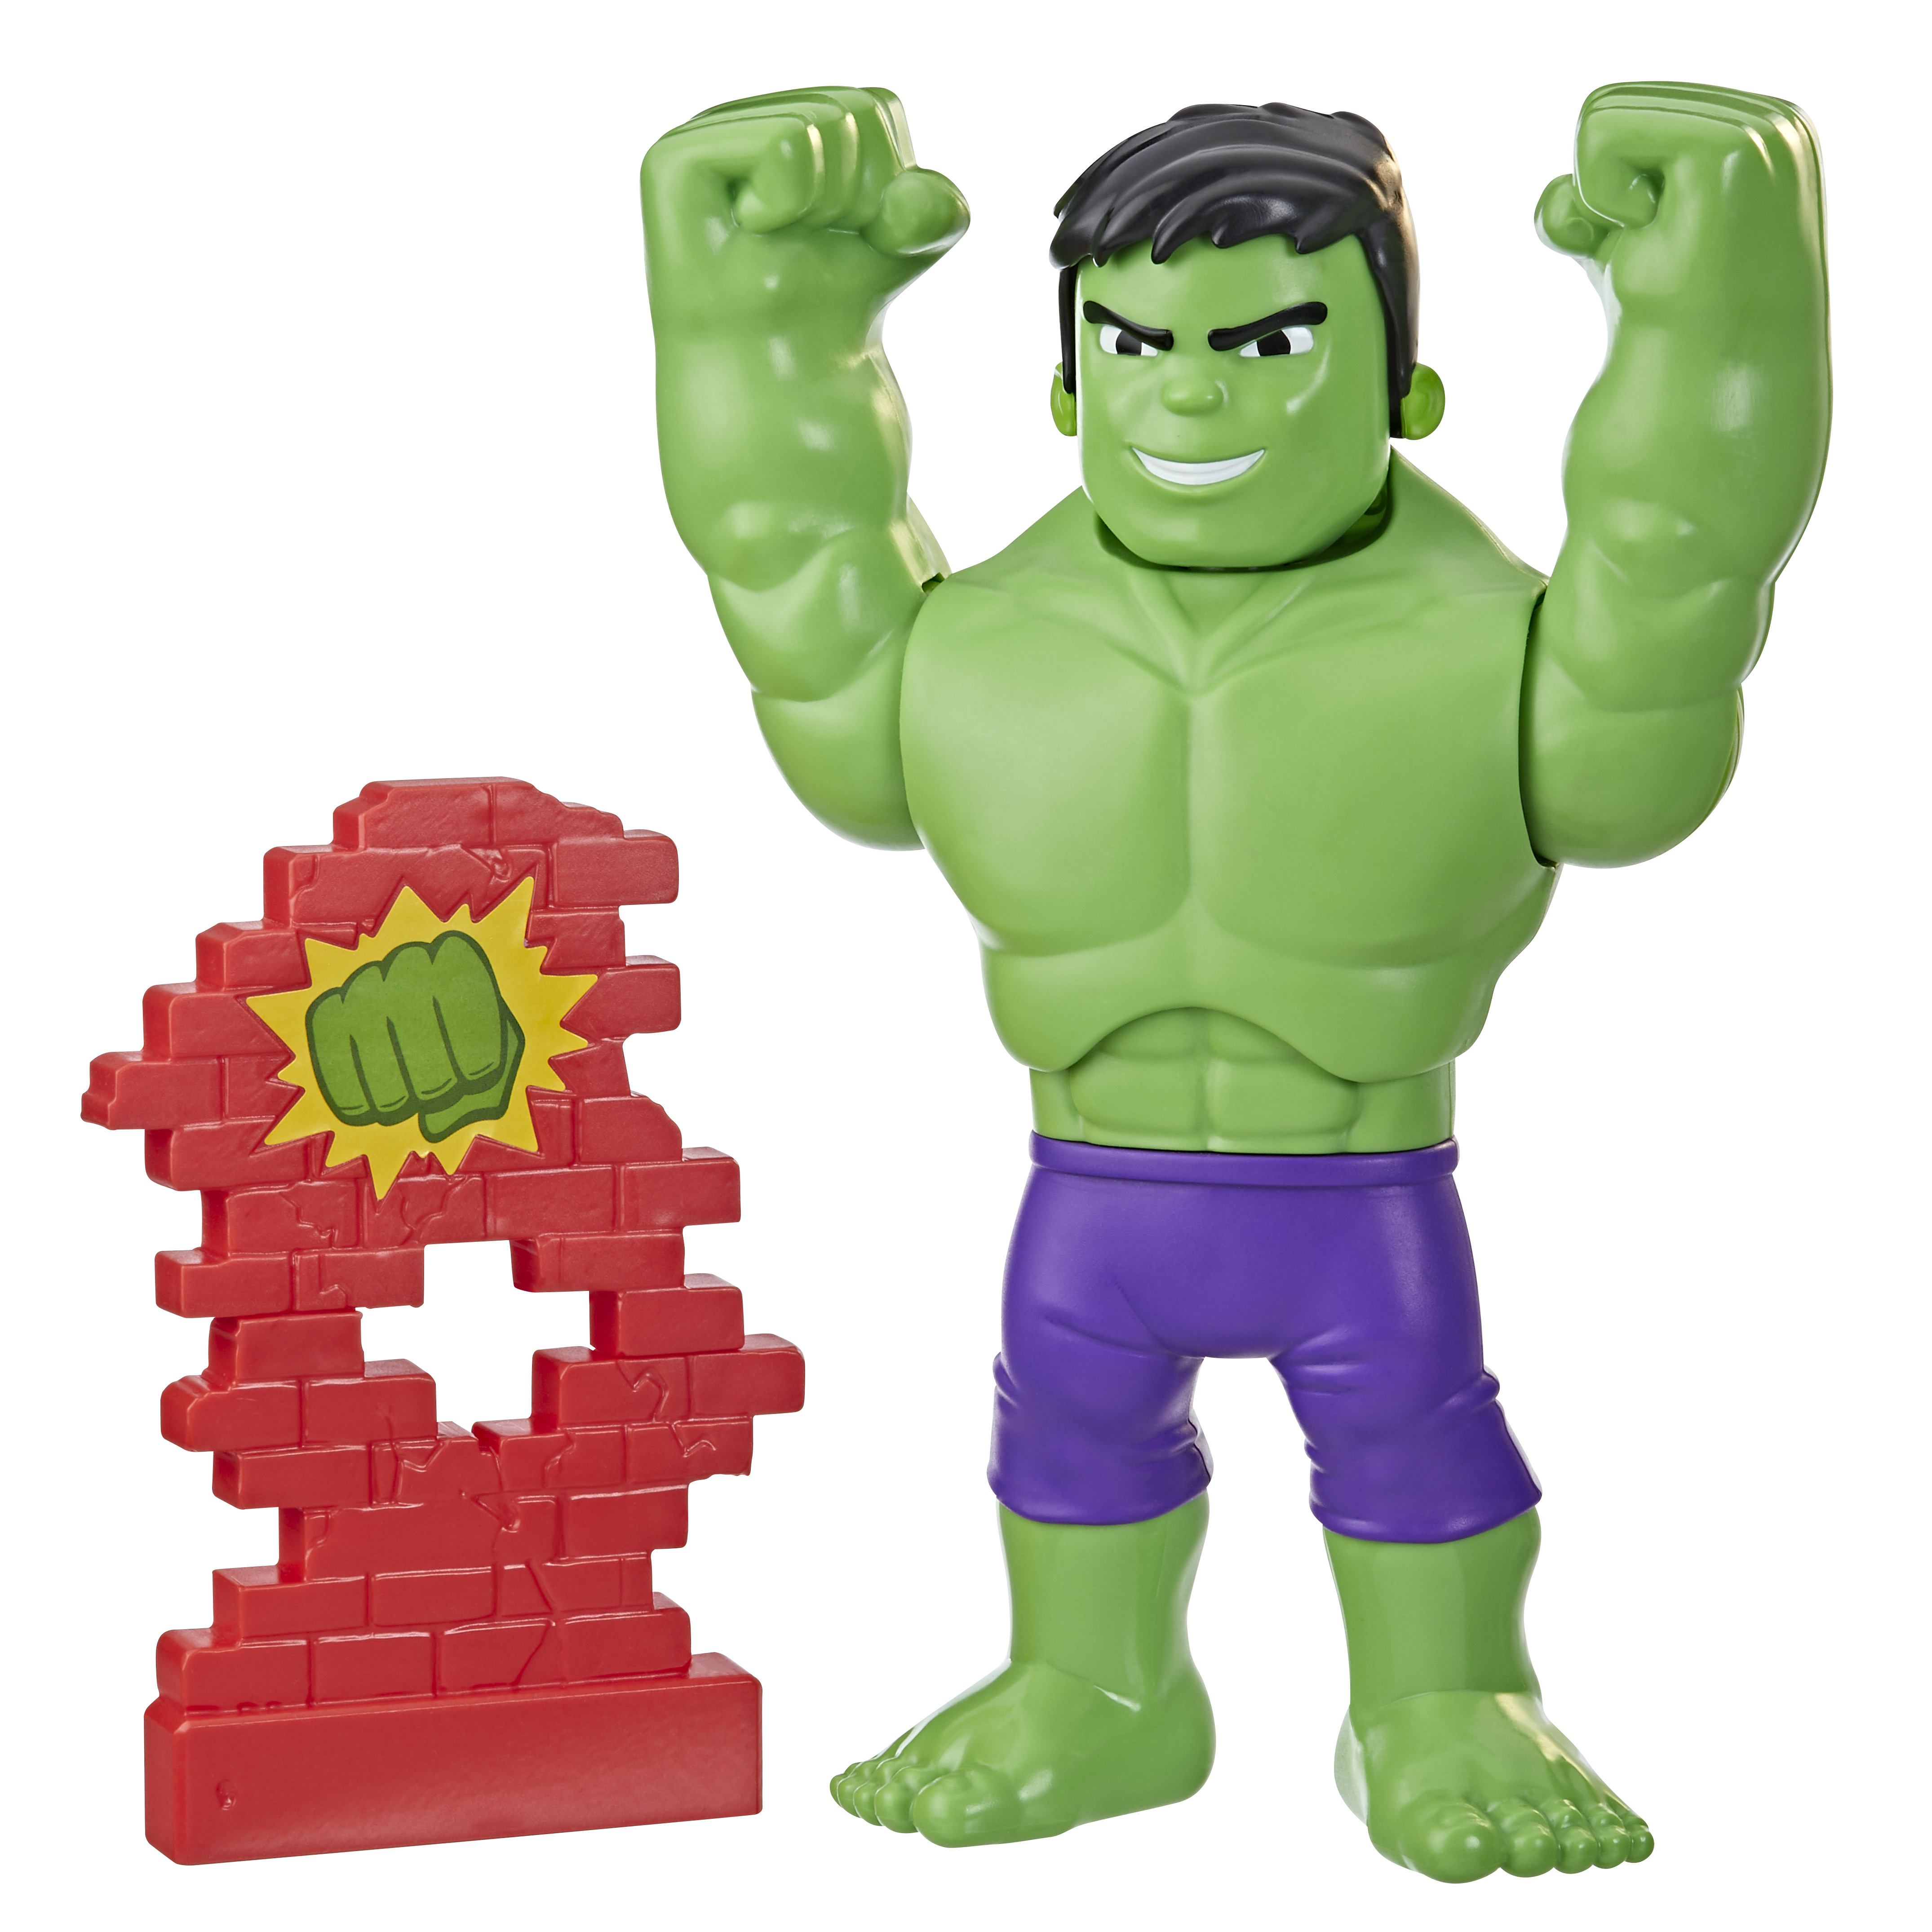 Marvel Spidey et ses Incroyables Amis - Peluche Hulk 20cm